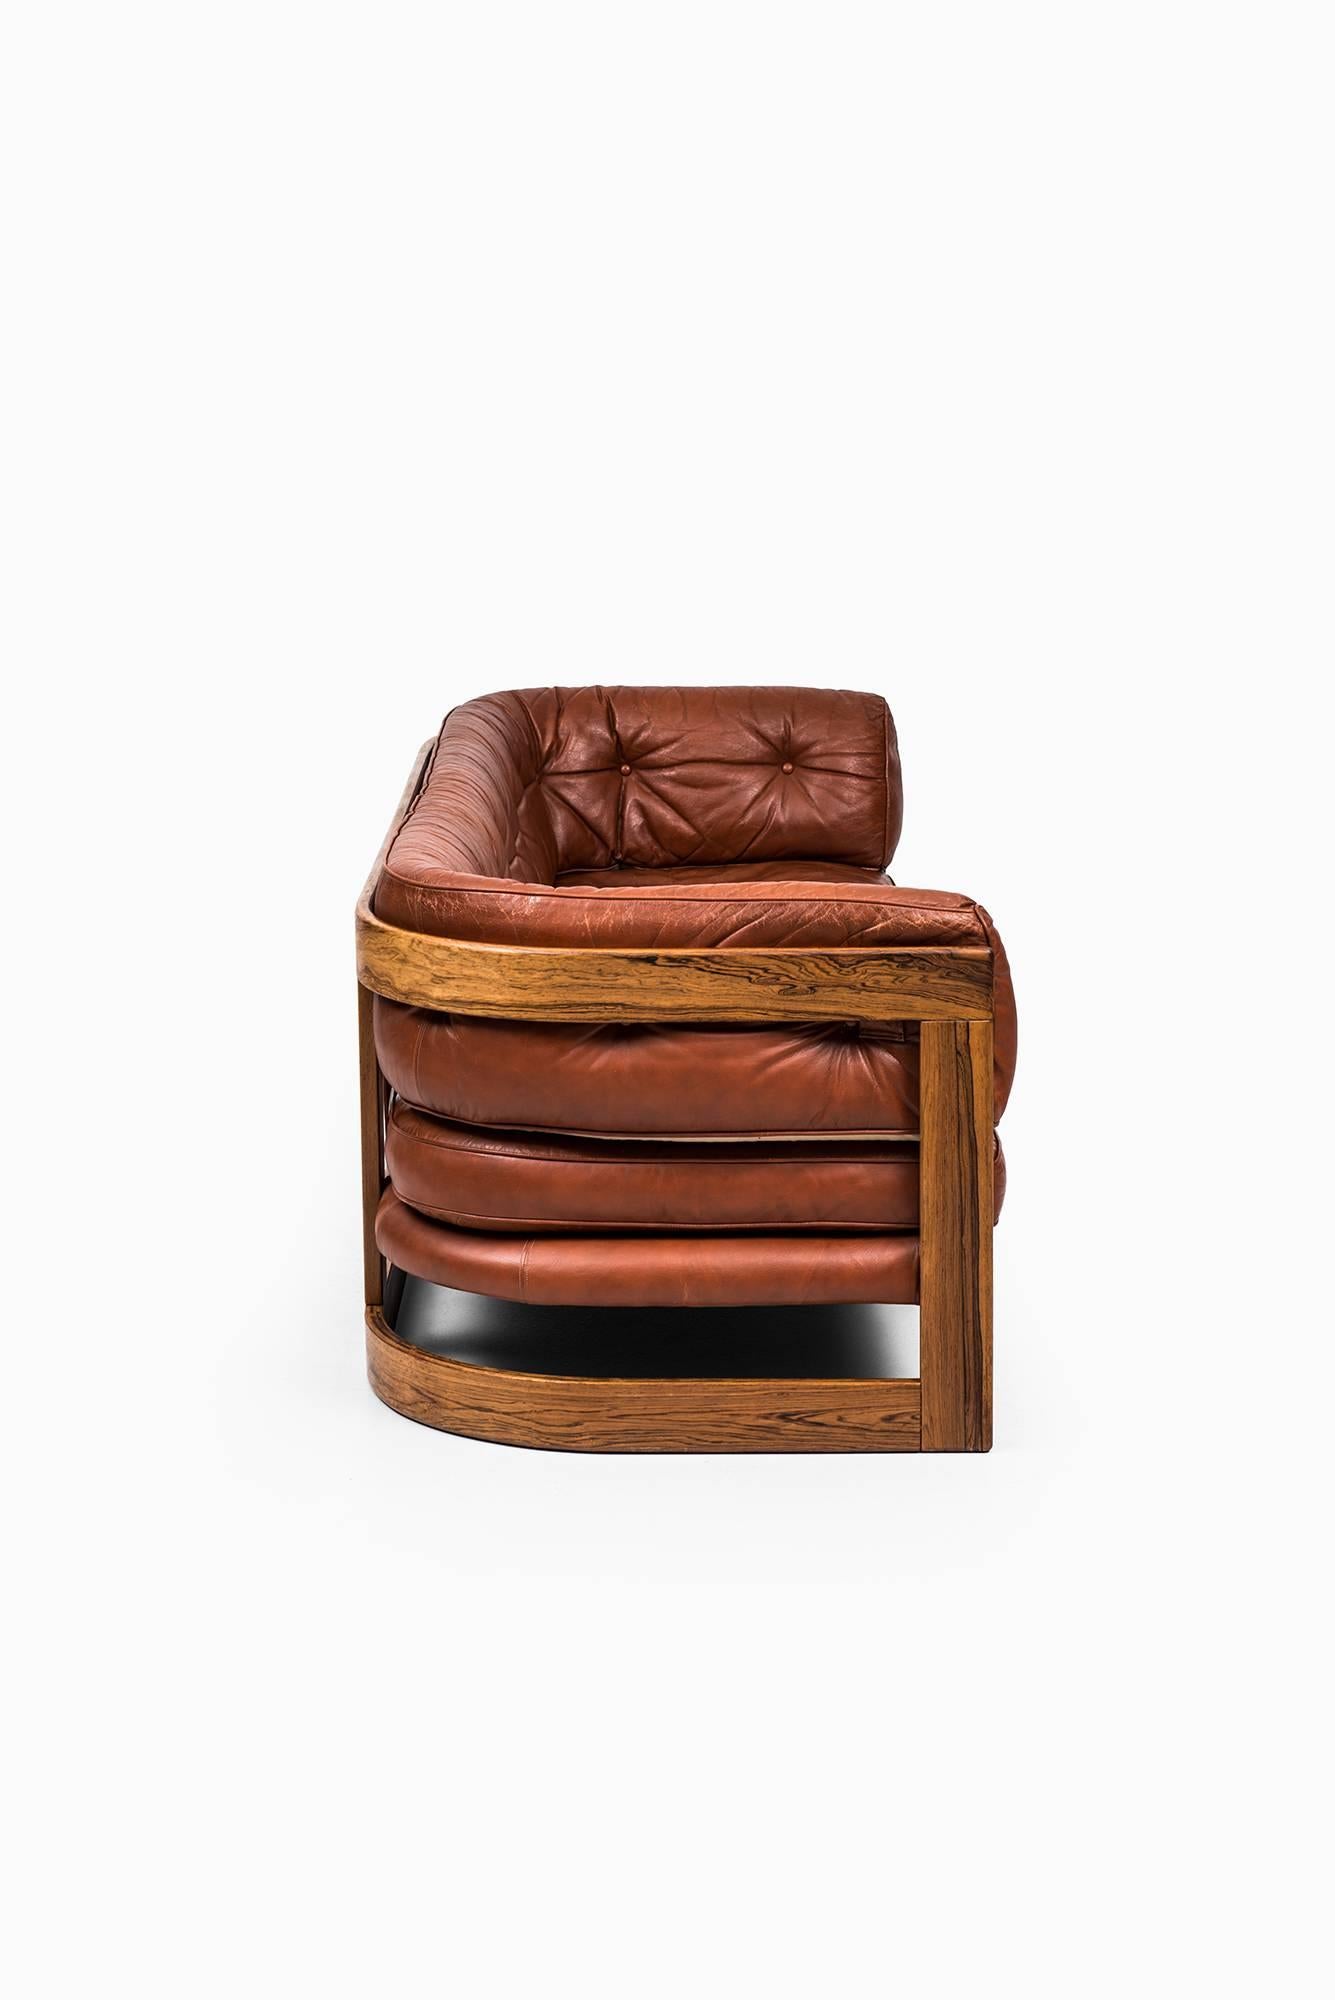 Leather Lennart Bender Three-Seat Sofa by Stjernmöbler in Sweden